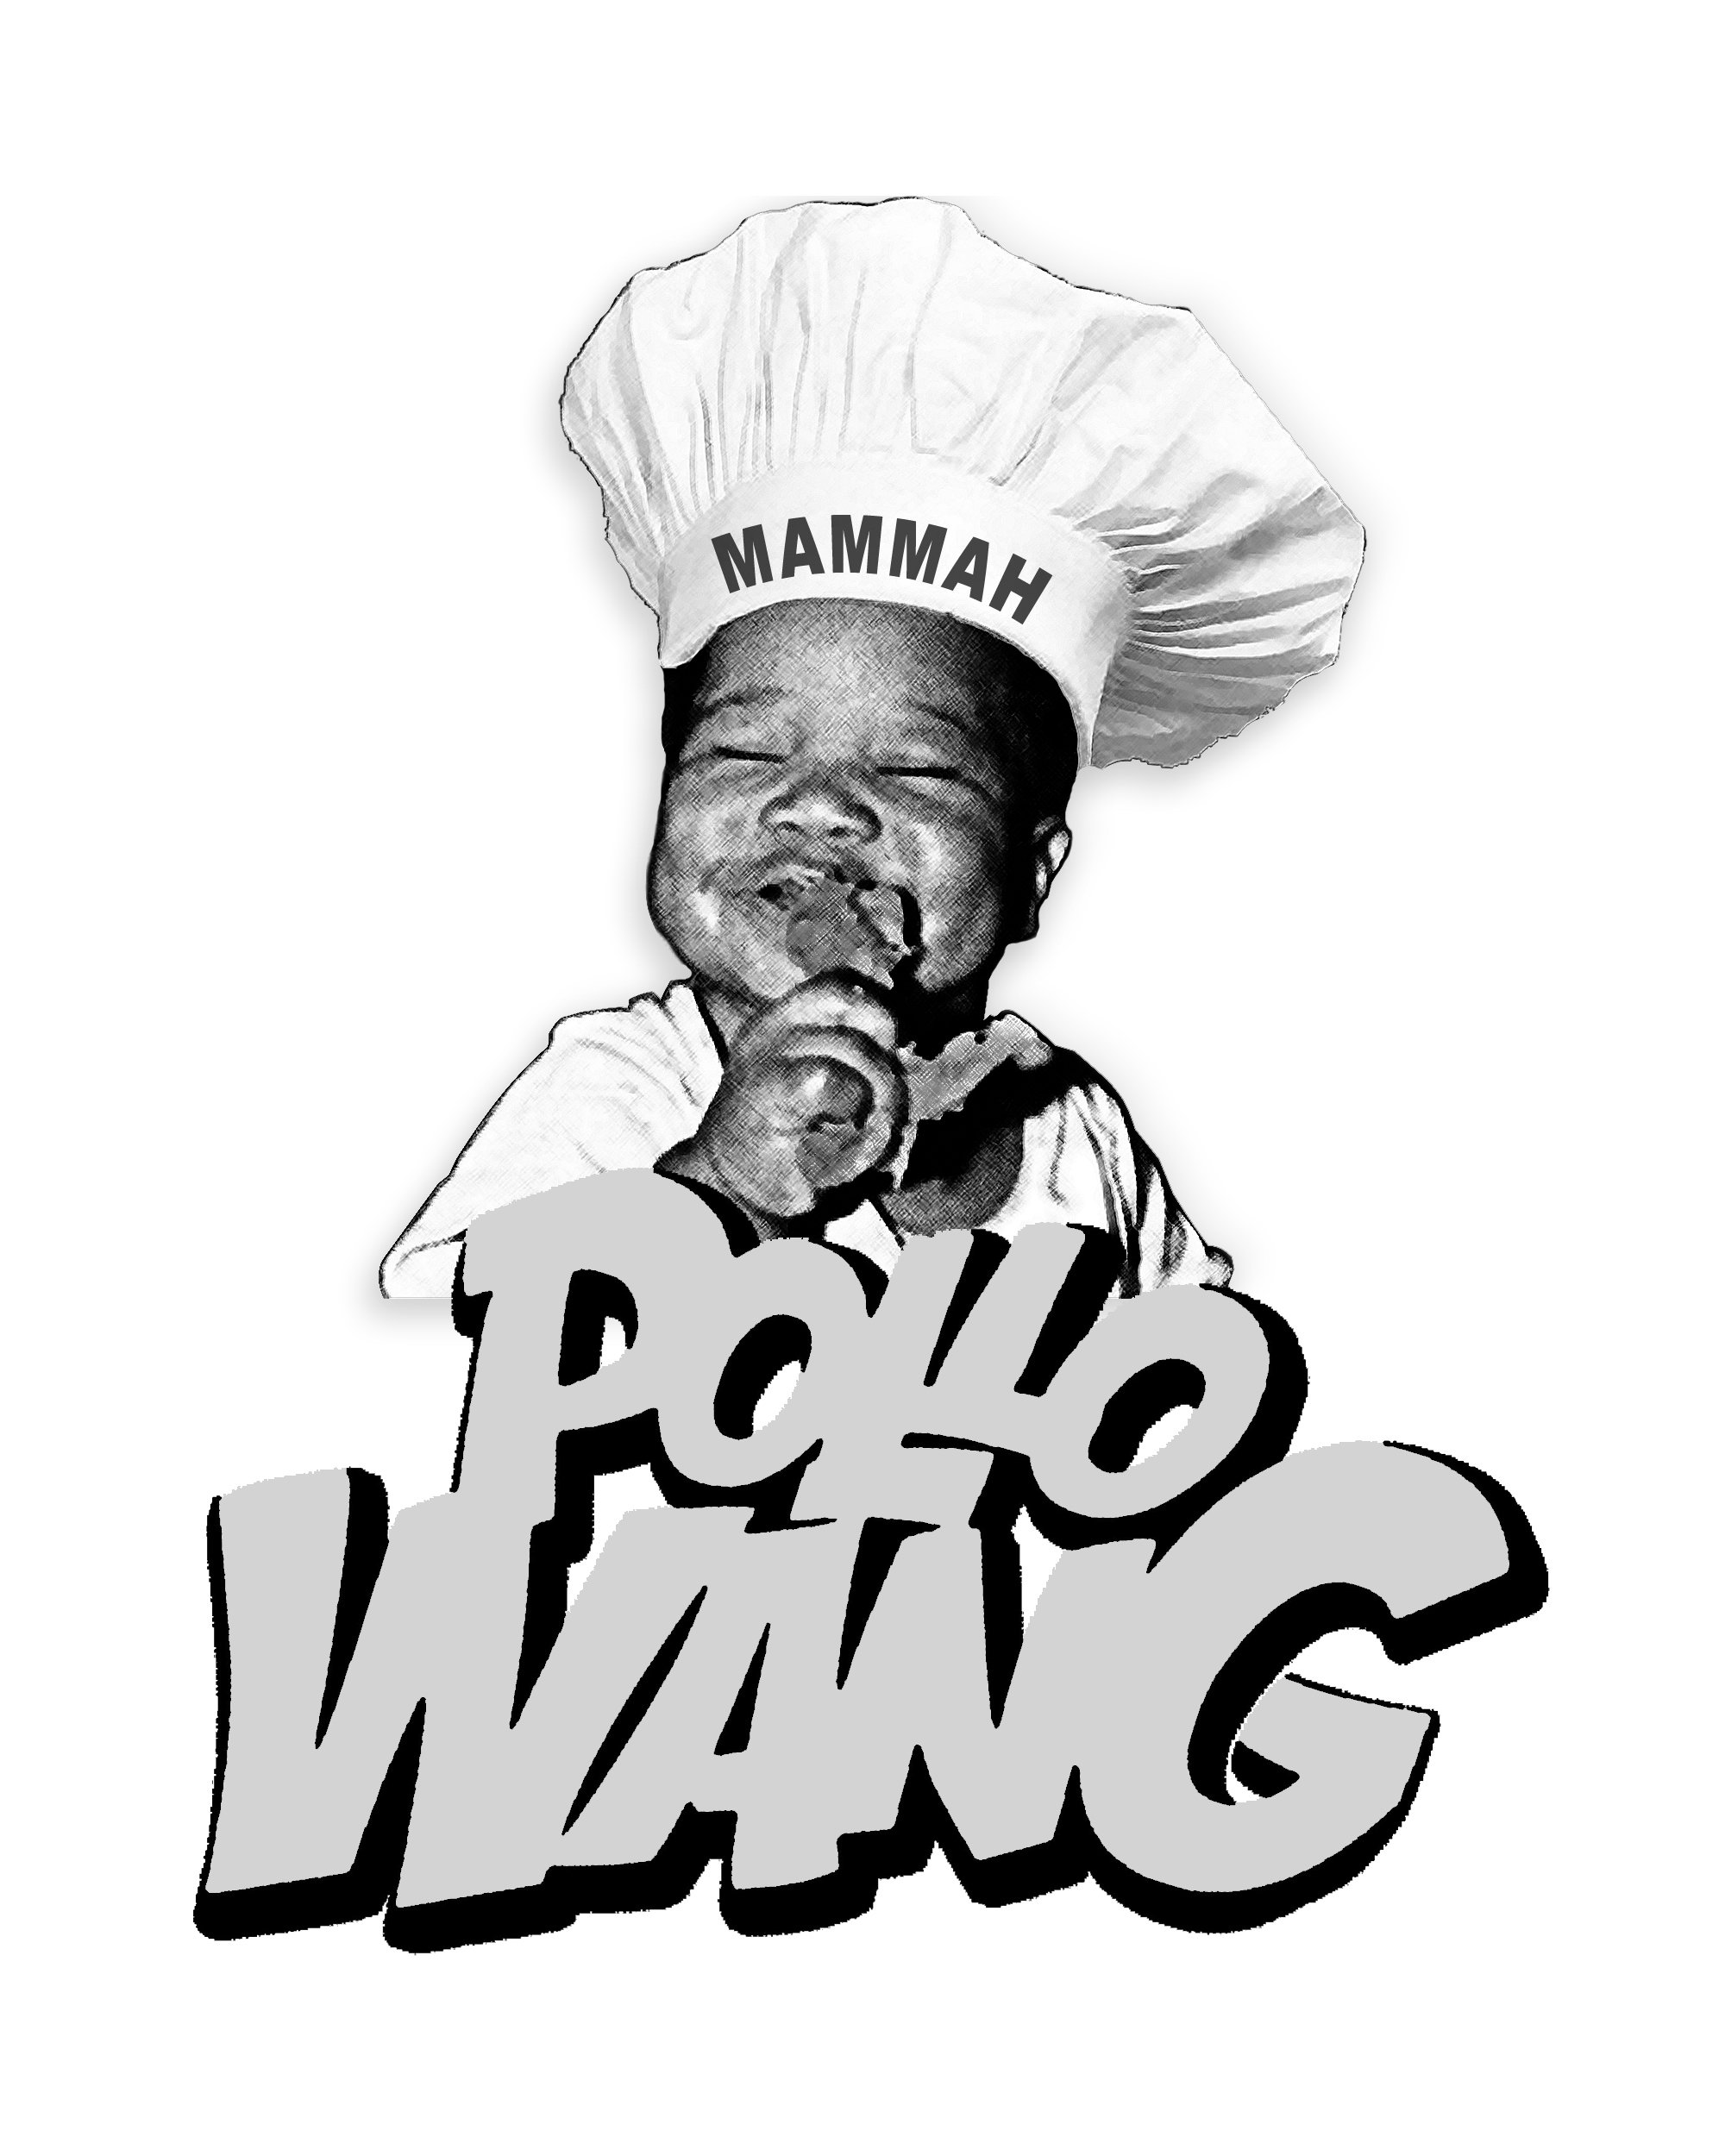 POLLO WANG - Maurice Harris Trademark Registration